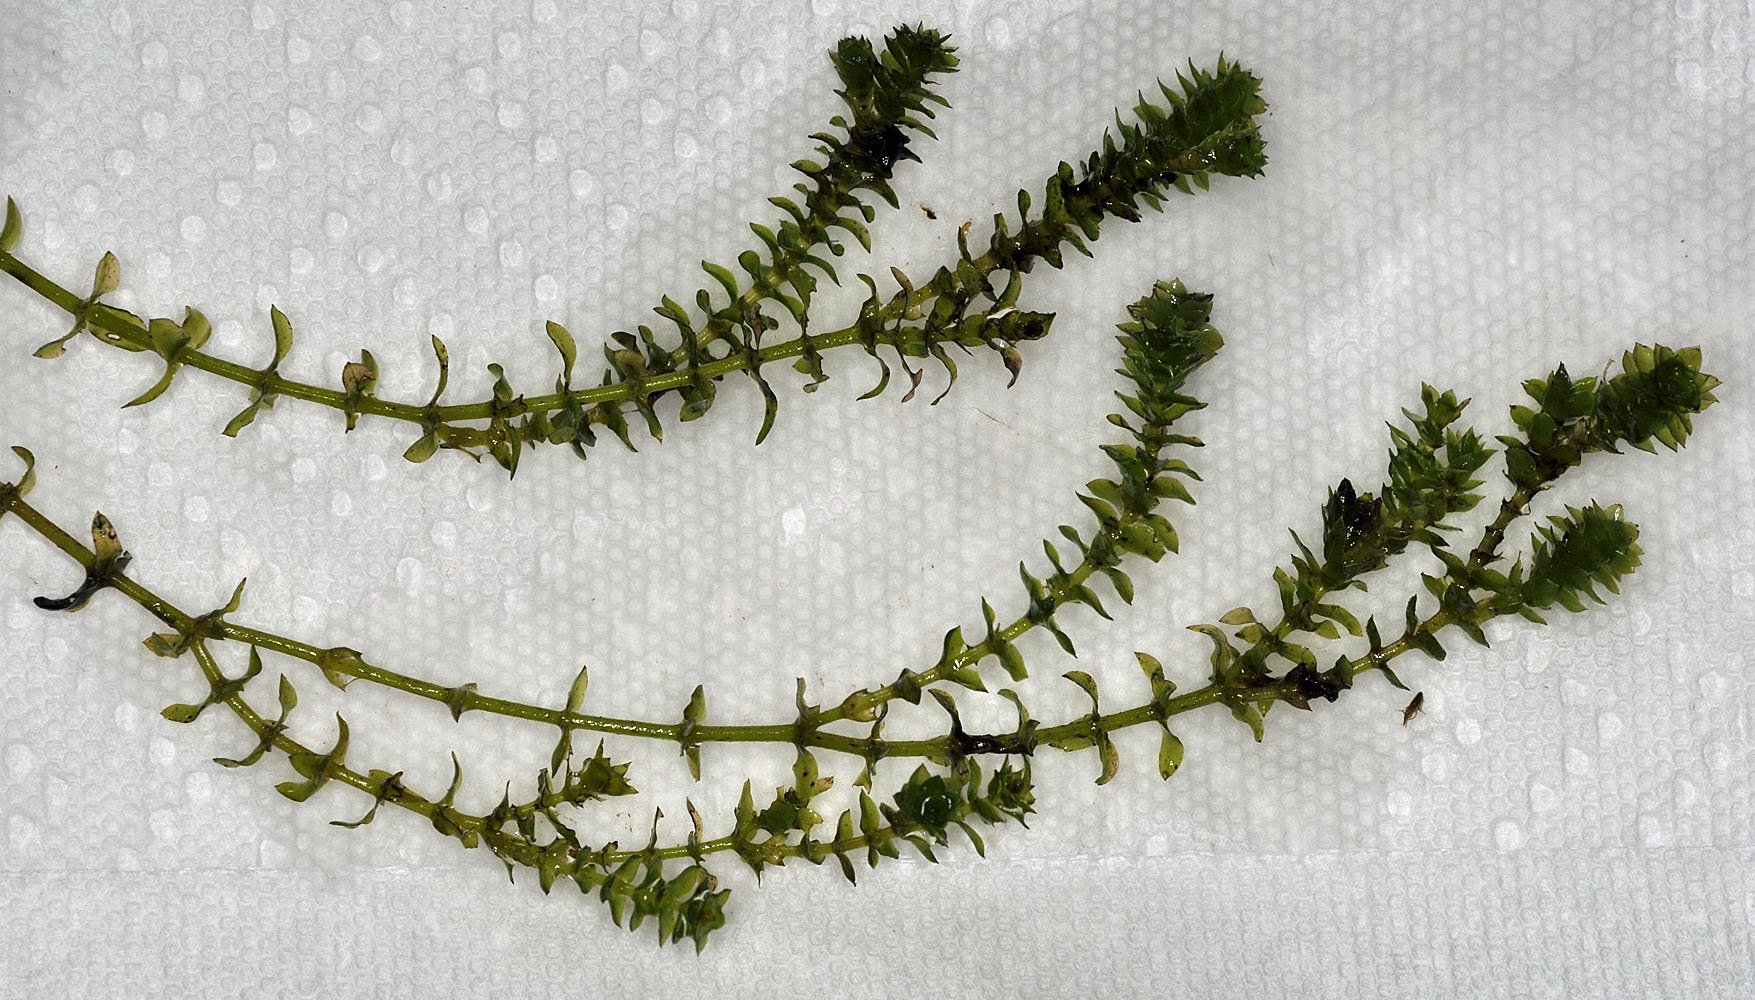 Flora of Eastern Washington Image: Elodea canadensis